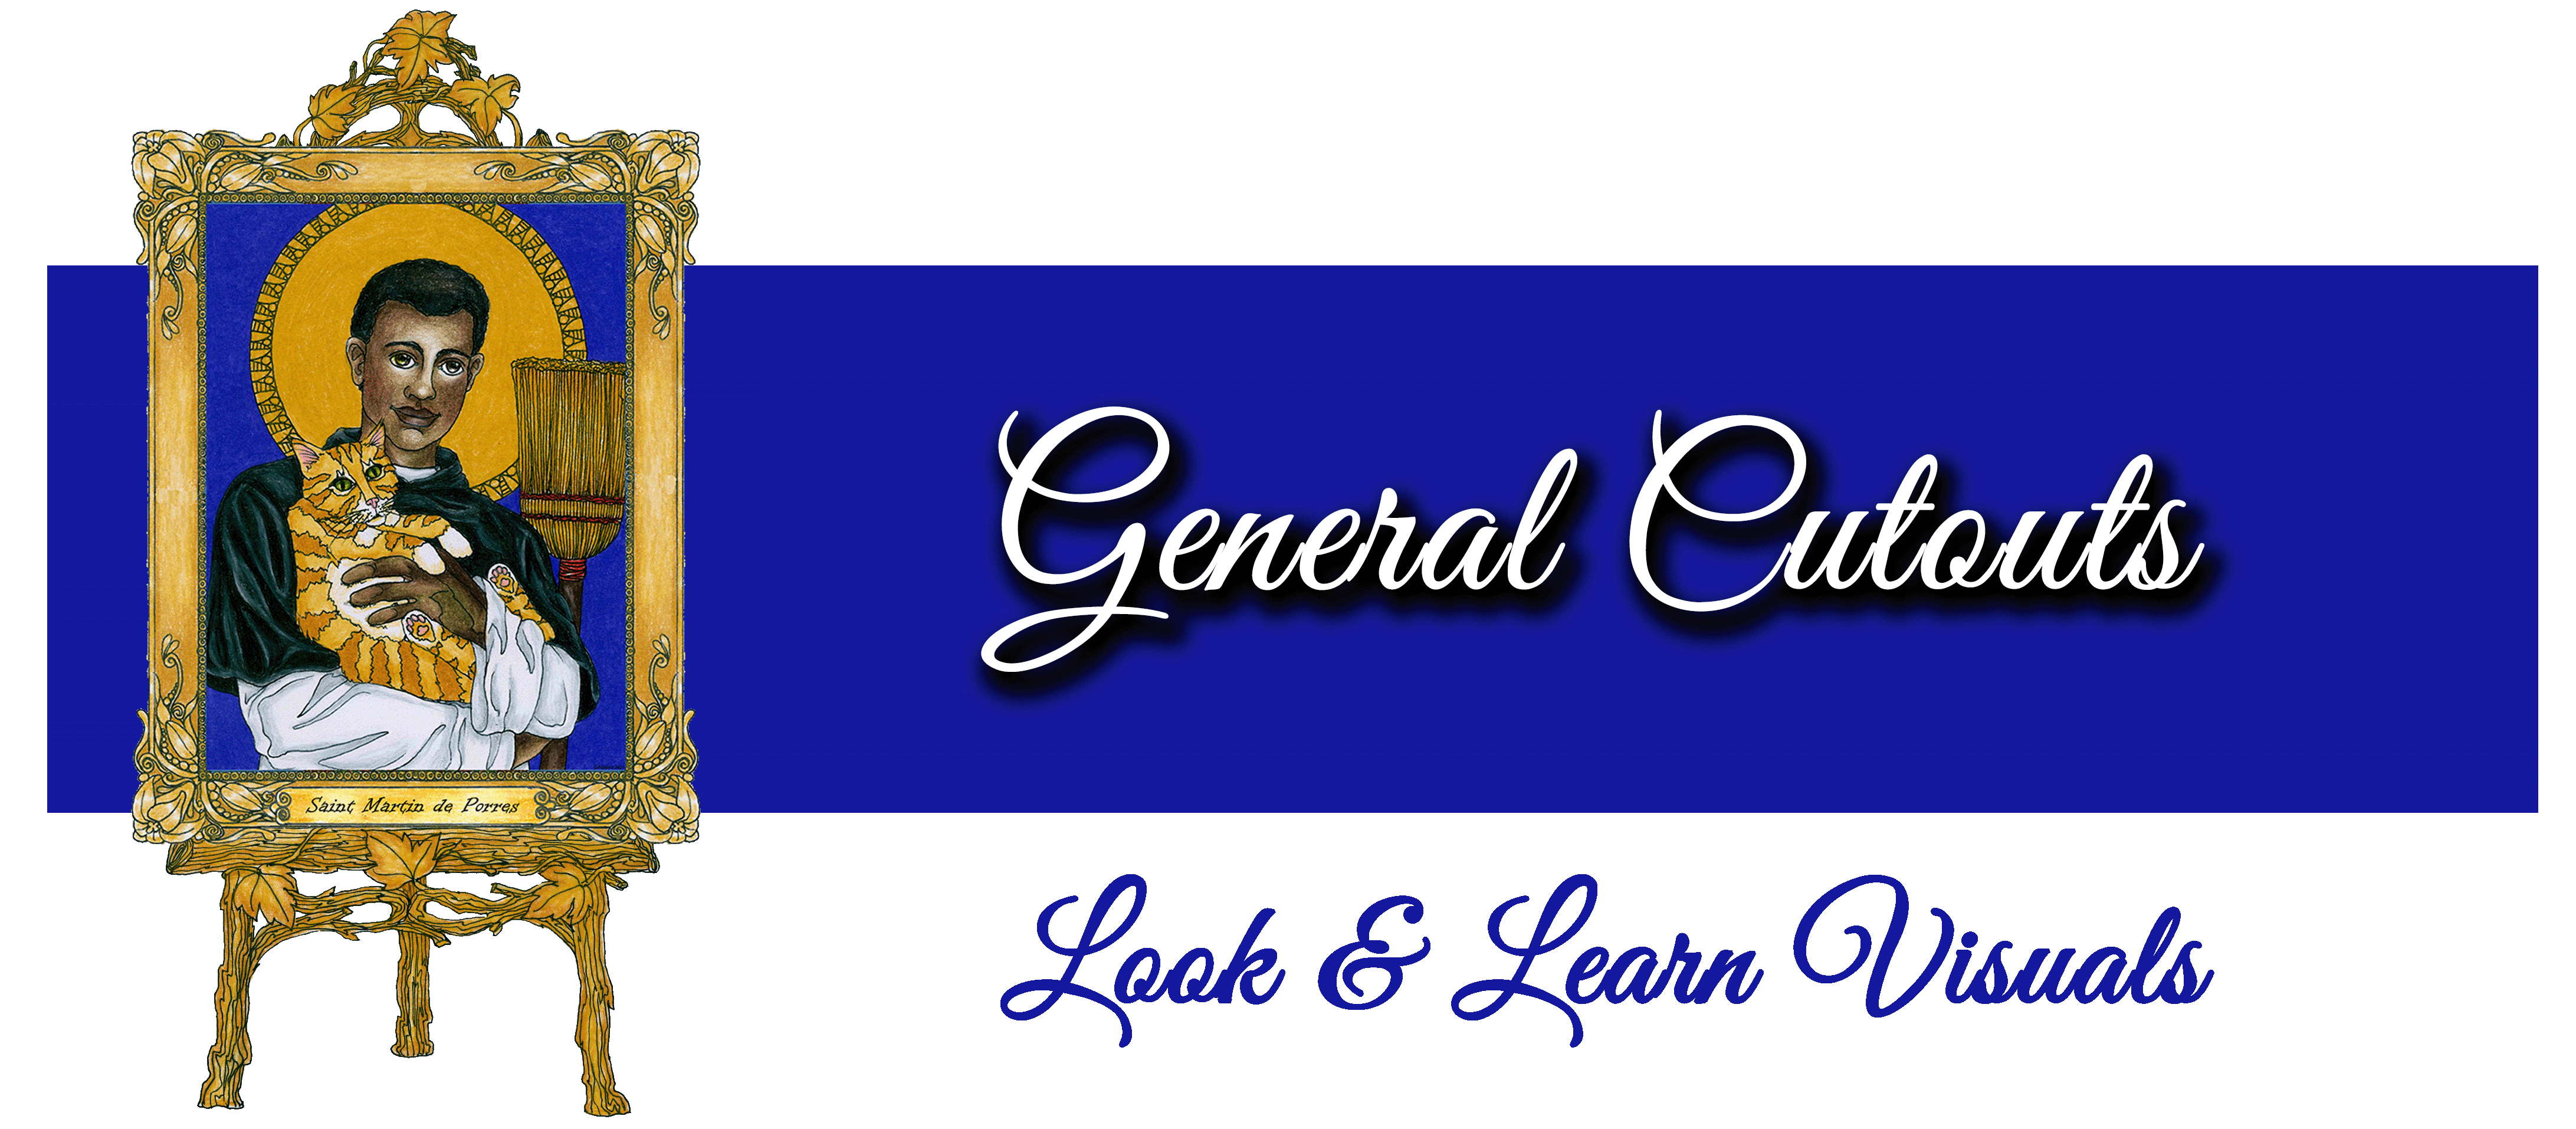 General Cutouts